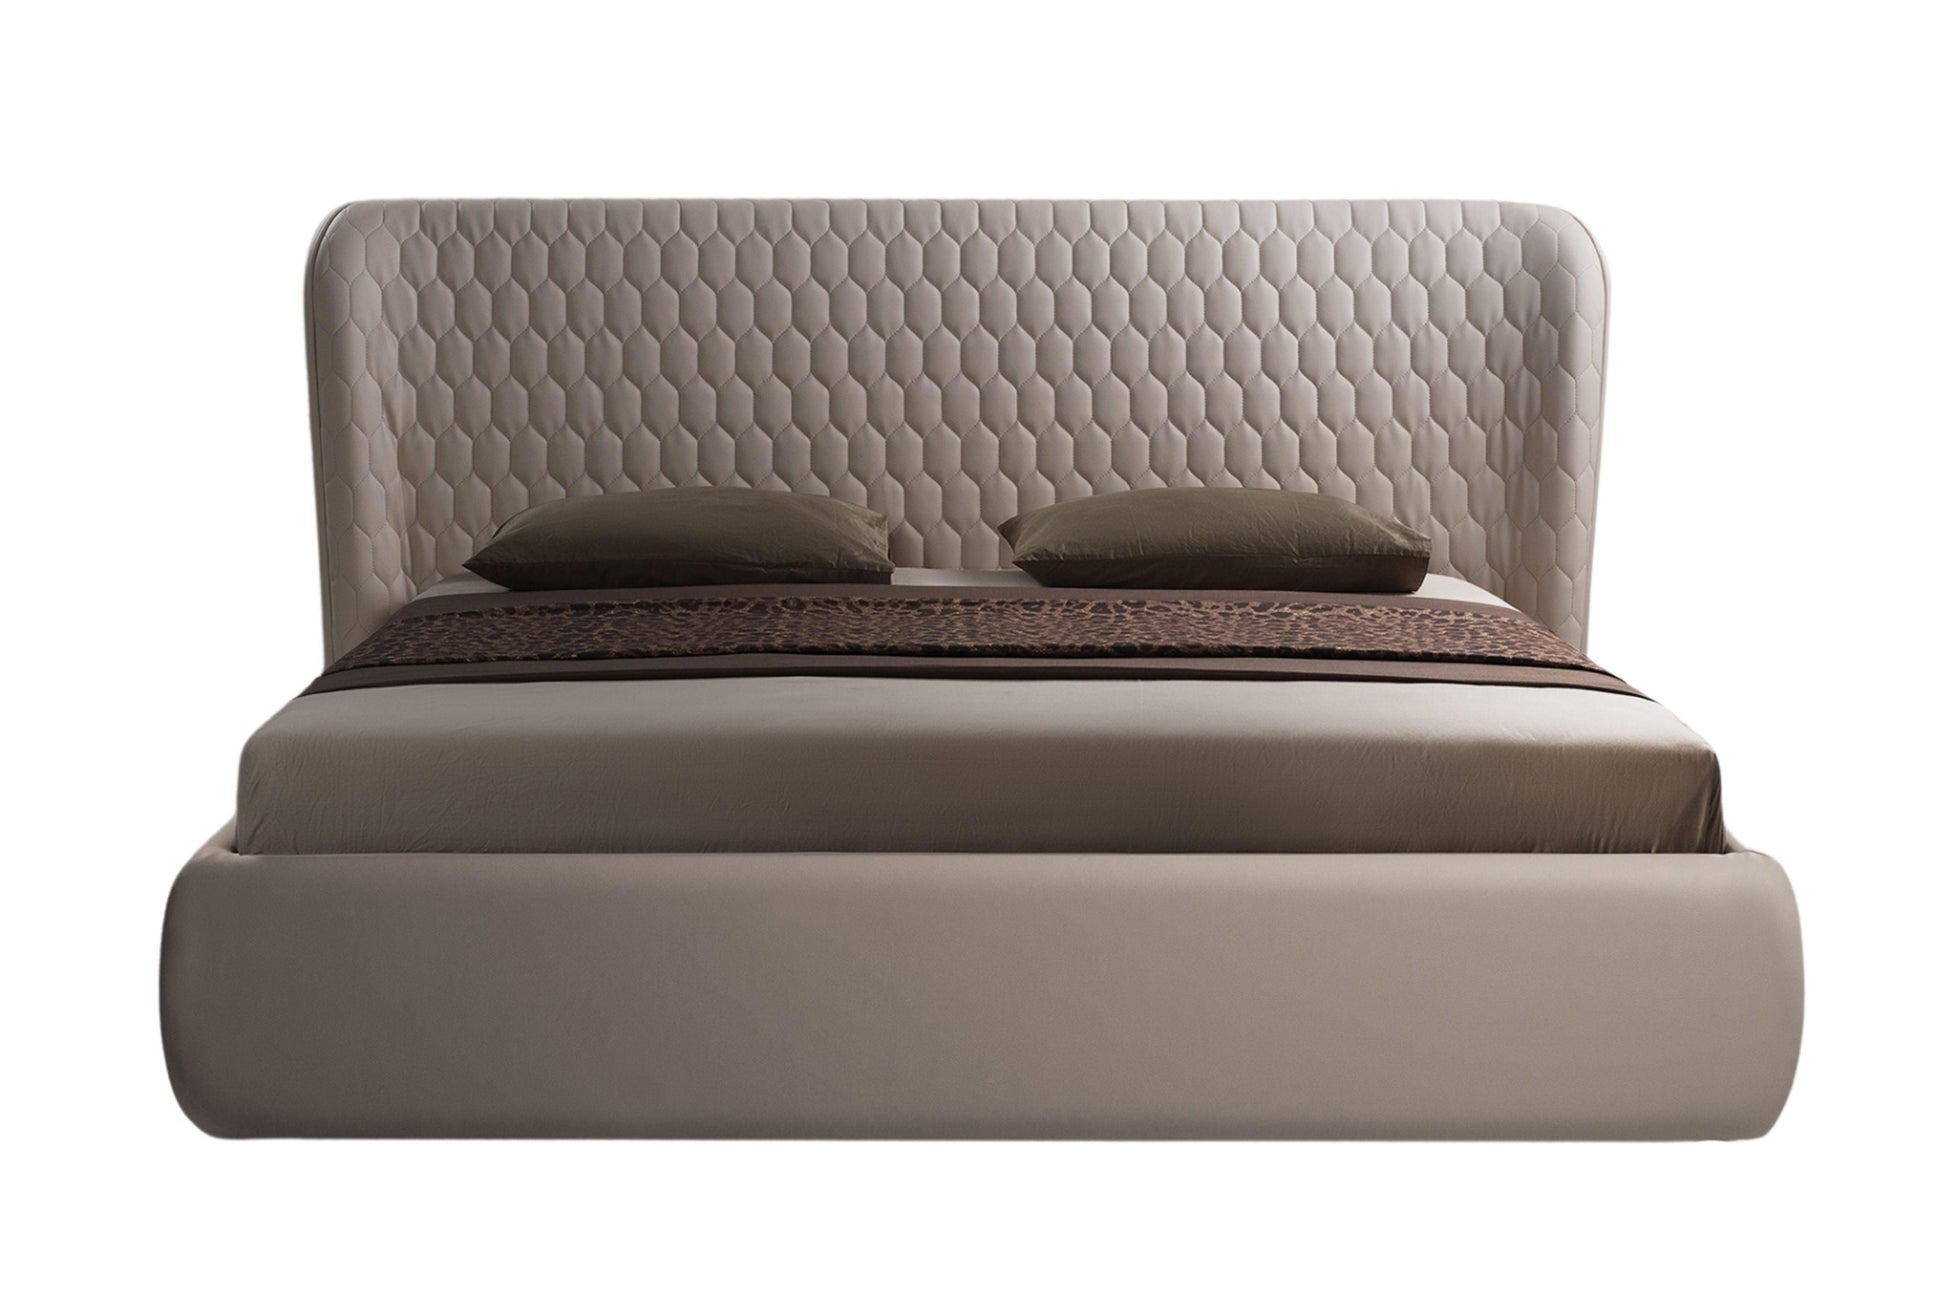 Agoura King and Queen Bed Model CB-A101QTA/CB-A101KTA - Venini Furniture 